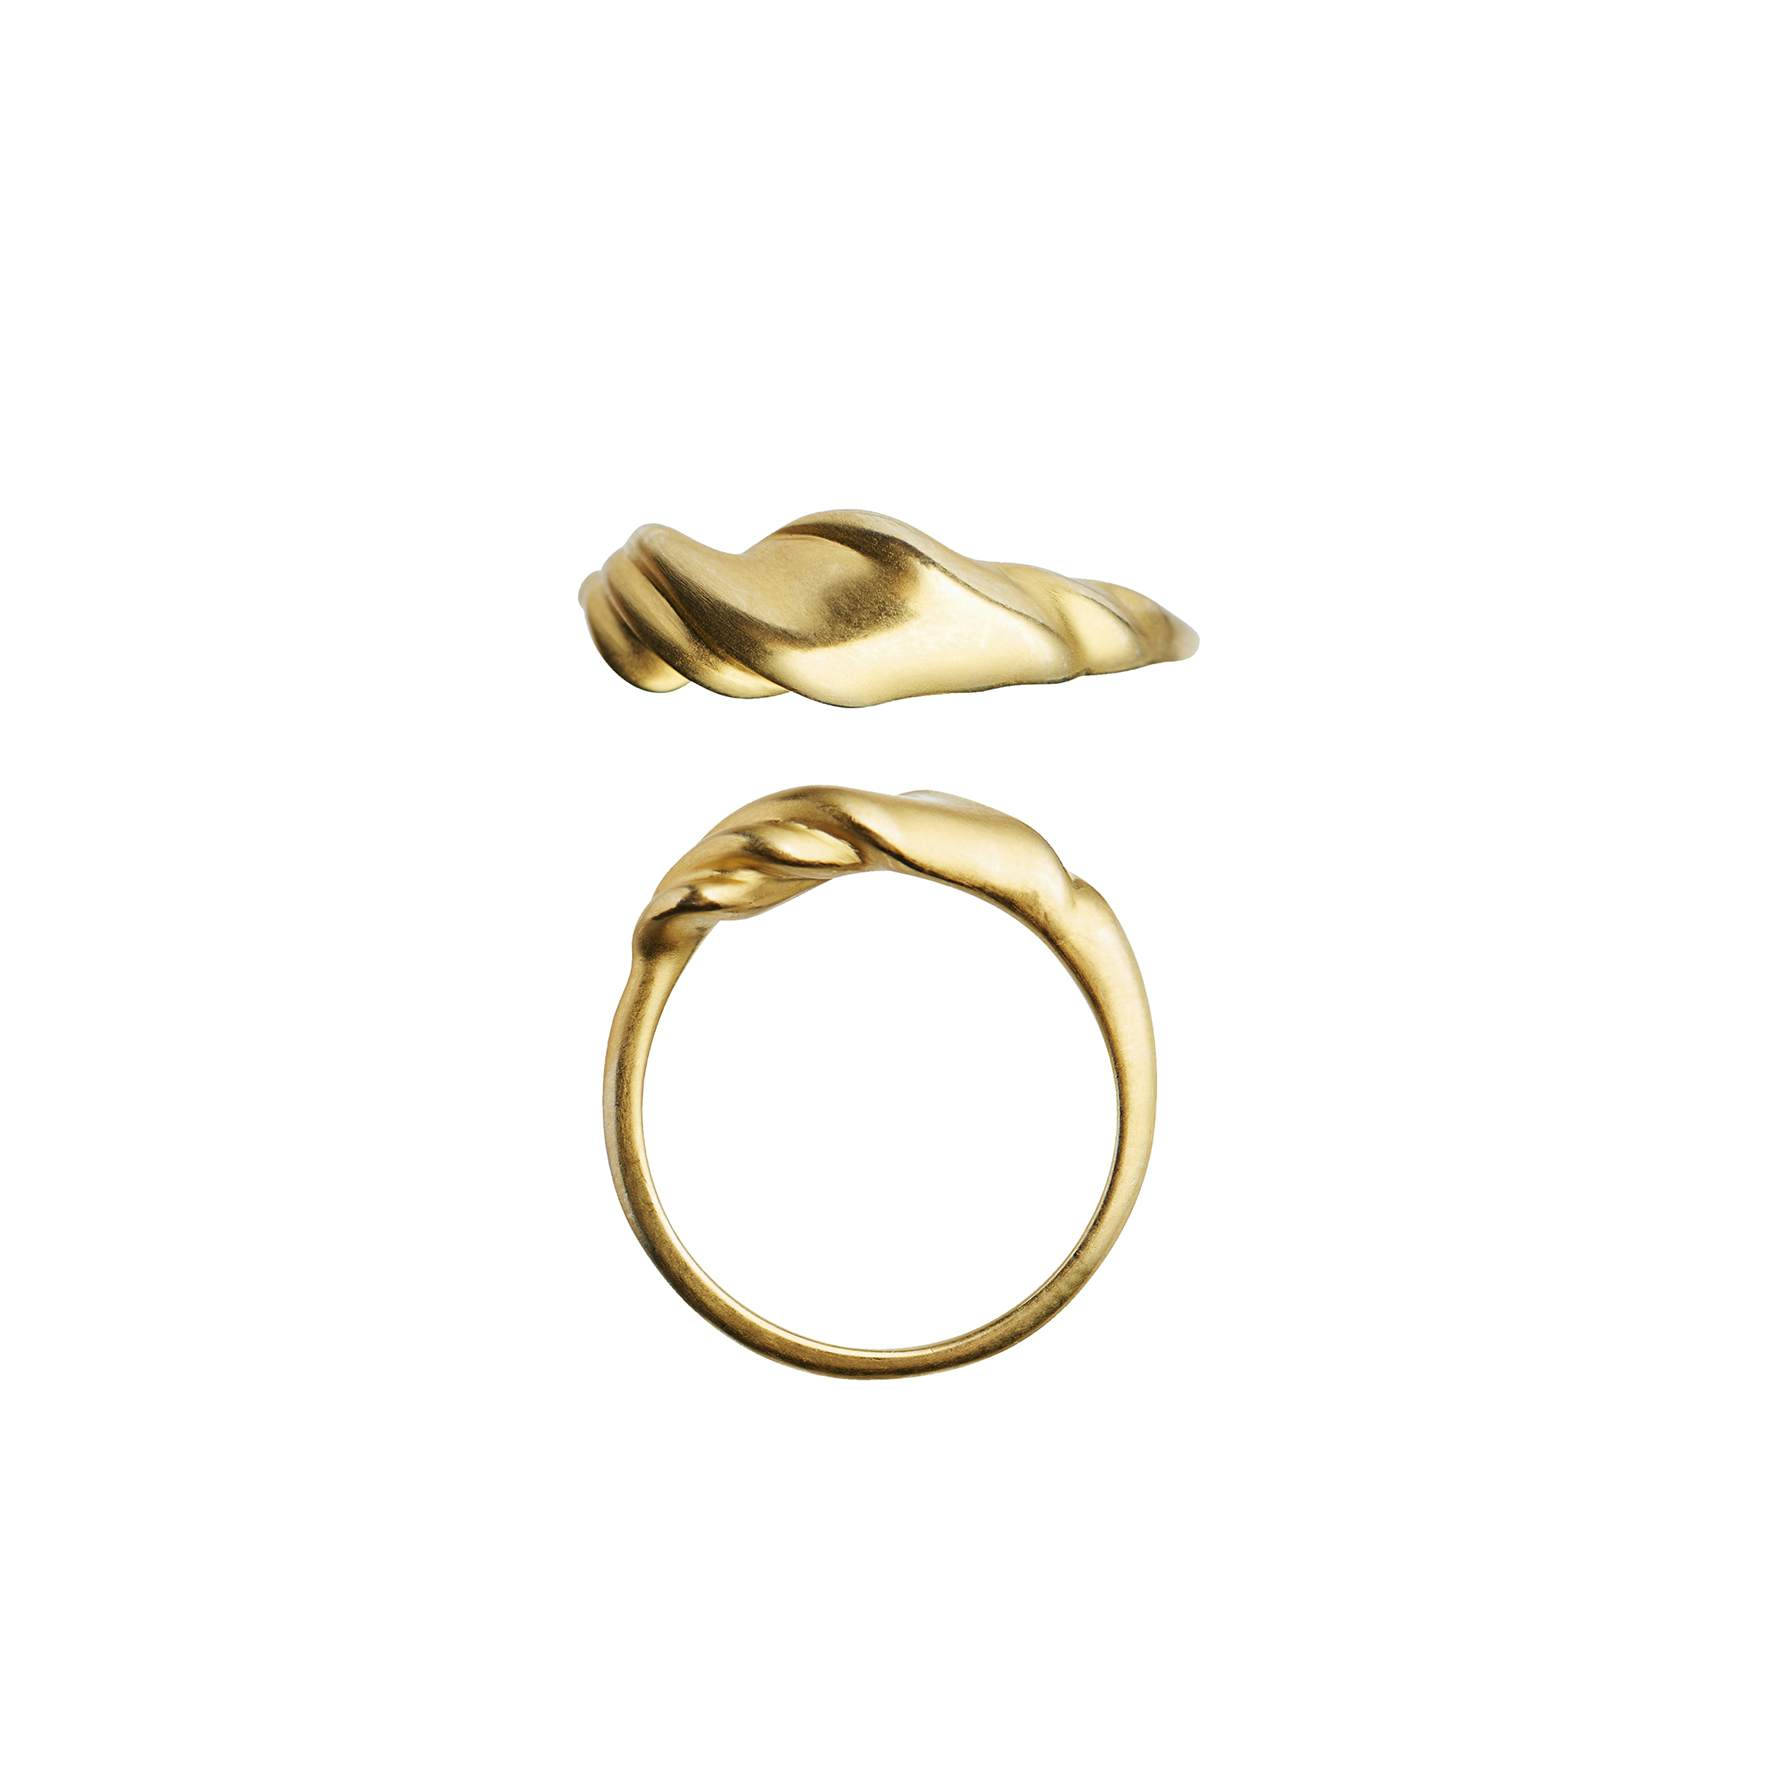 Velvet Ring von STINE A Jewelry in Vergoldet-Silber Sterling 925